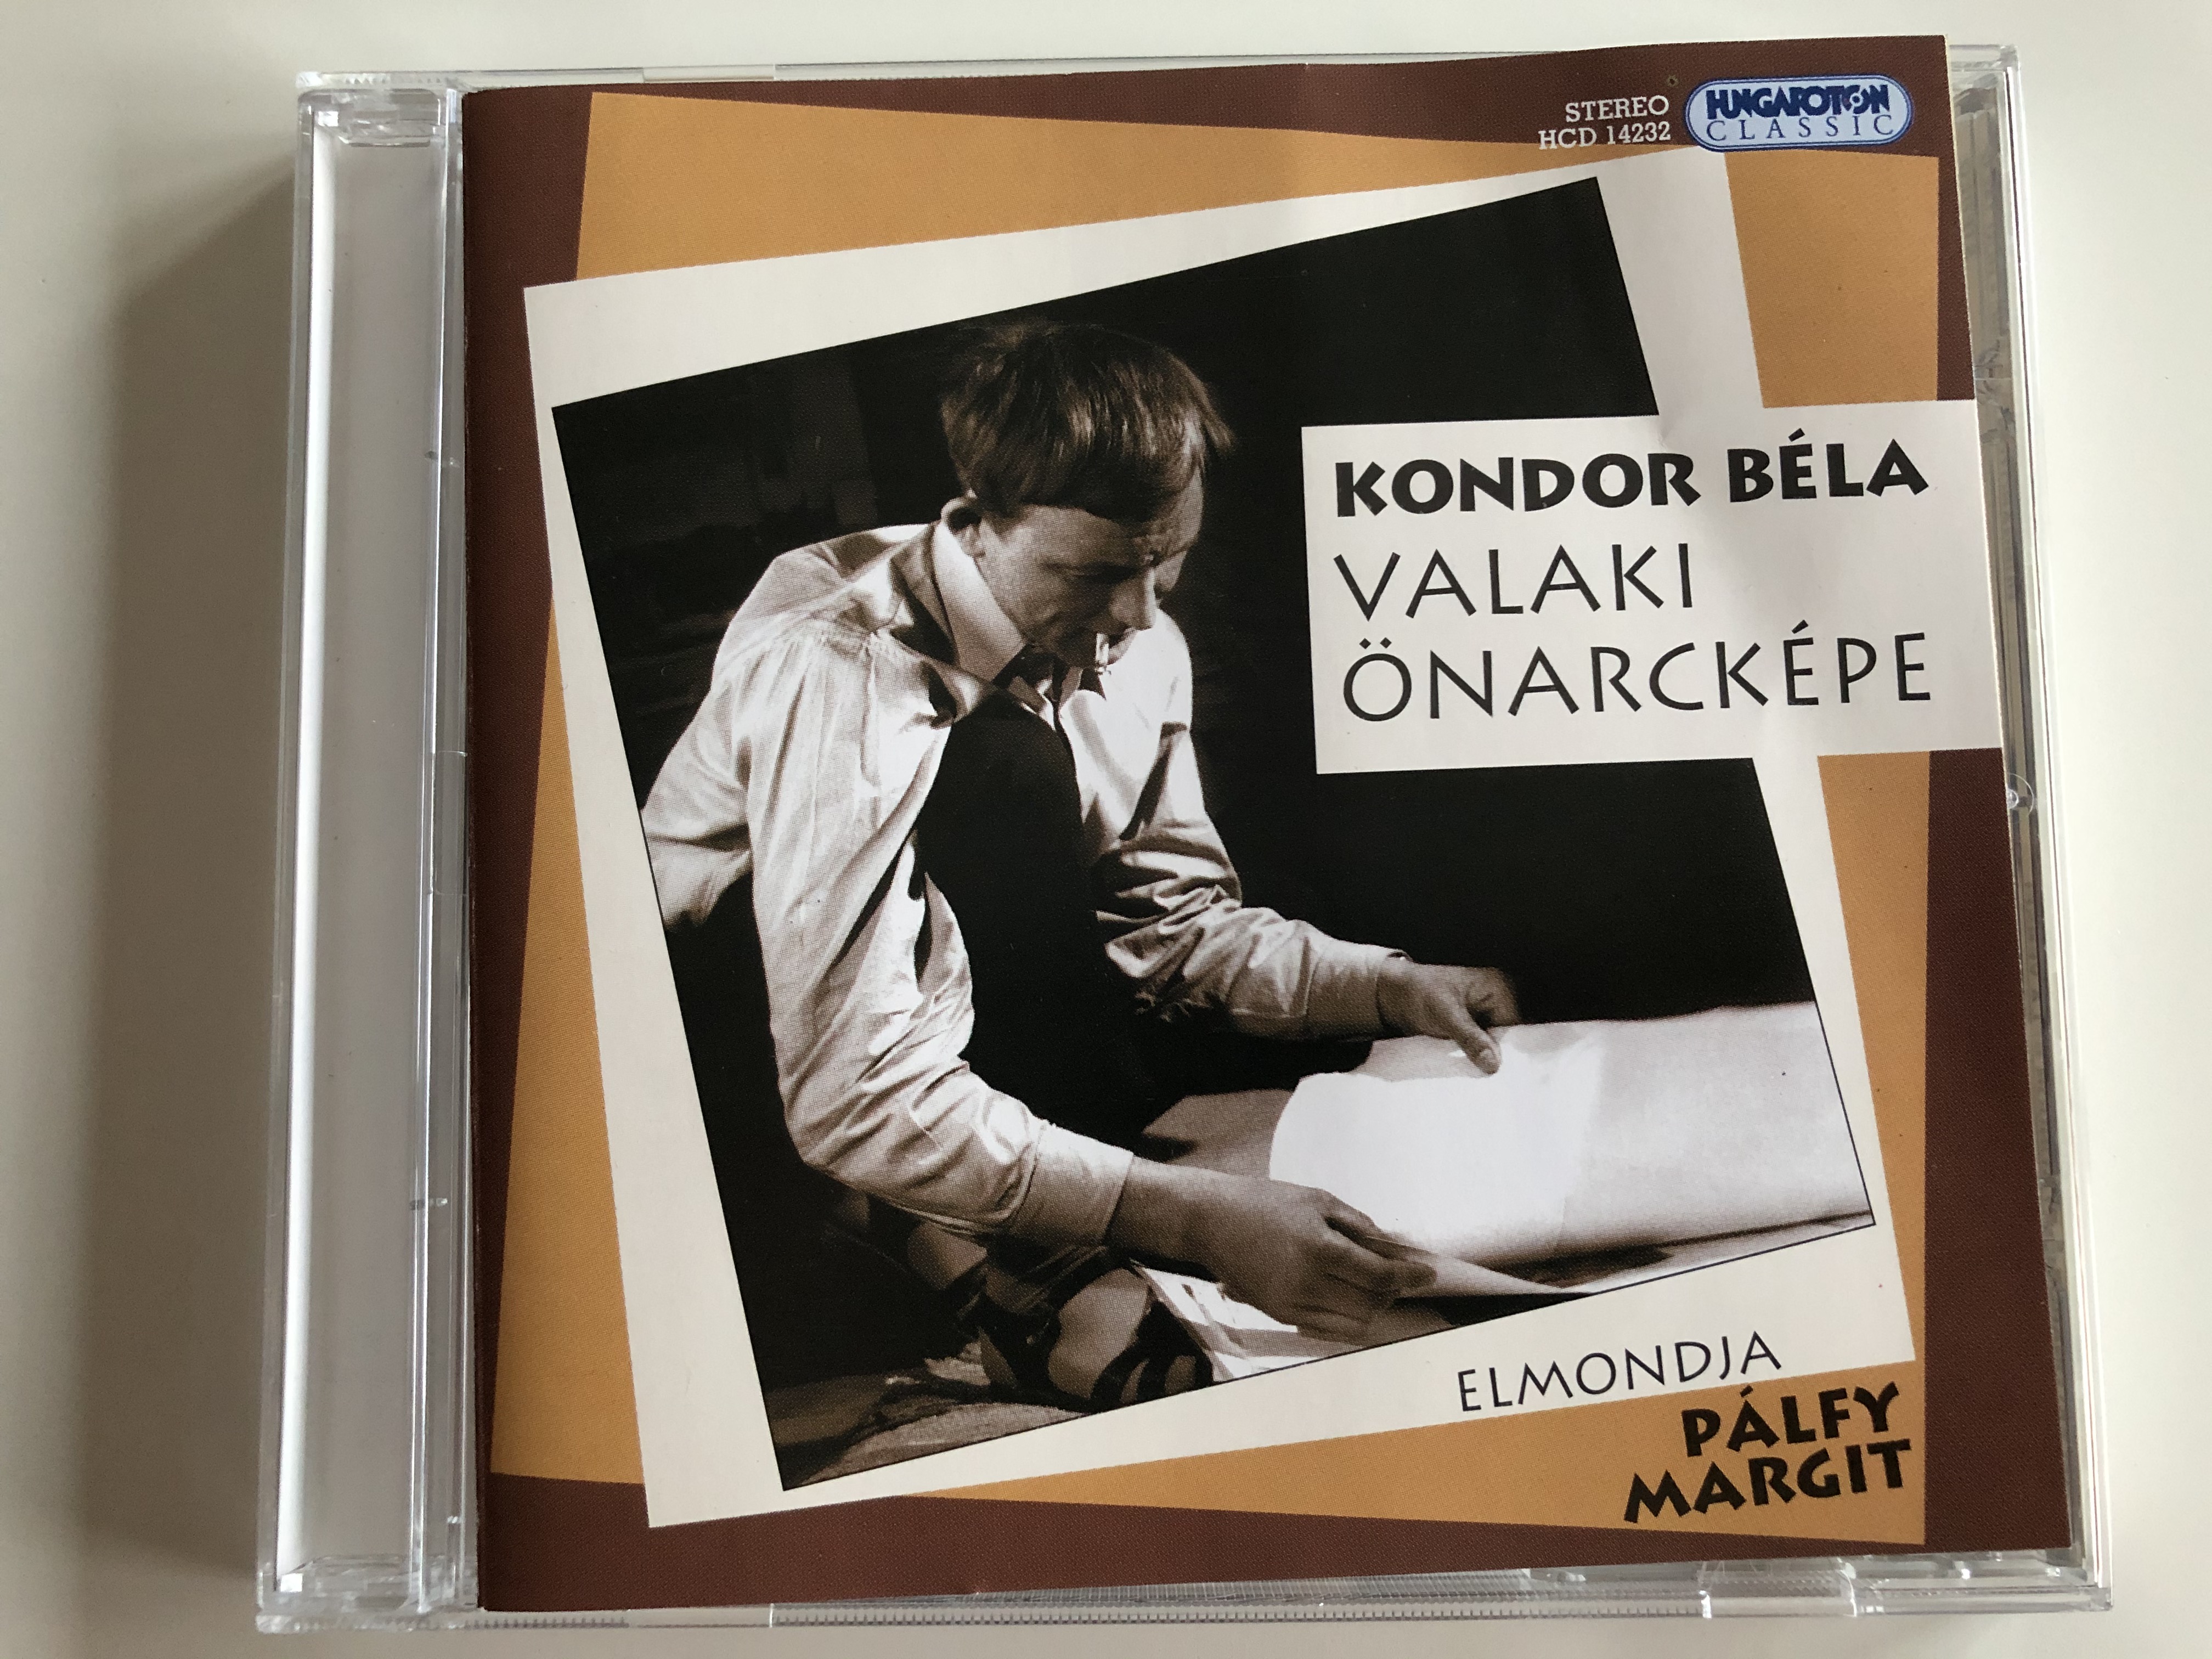 kondor-bela-valaki-onarckepe-elmondja-palfy-margit-hungaroton-classic-audio-cd-2006-stereo-hcd-14232-1-.jpg